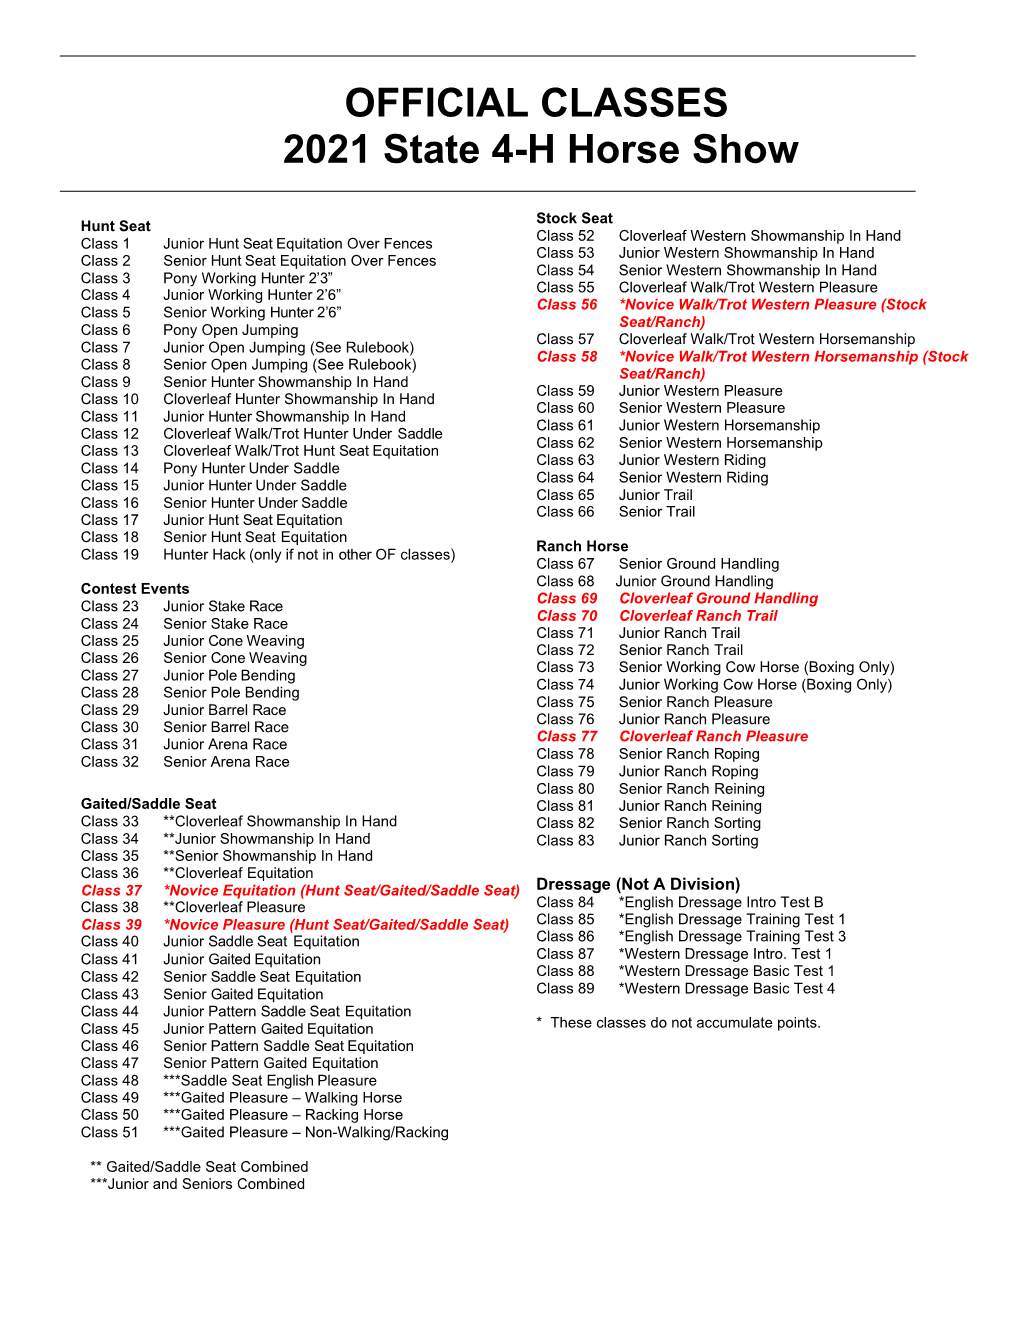 2021 Georgia 4-H State Horse Show Class List